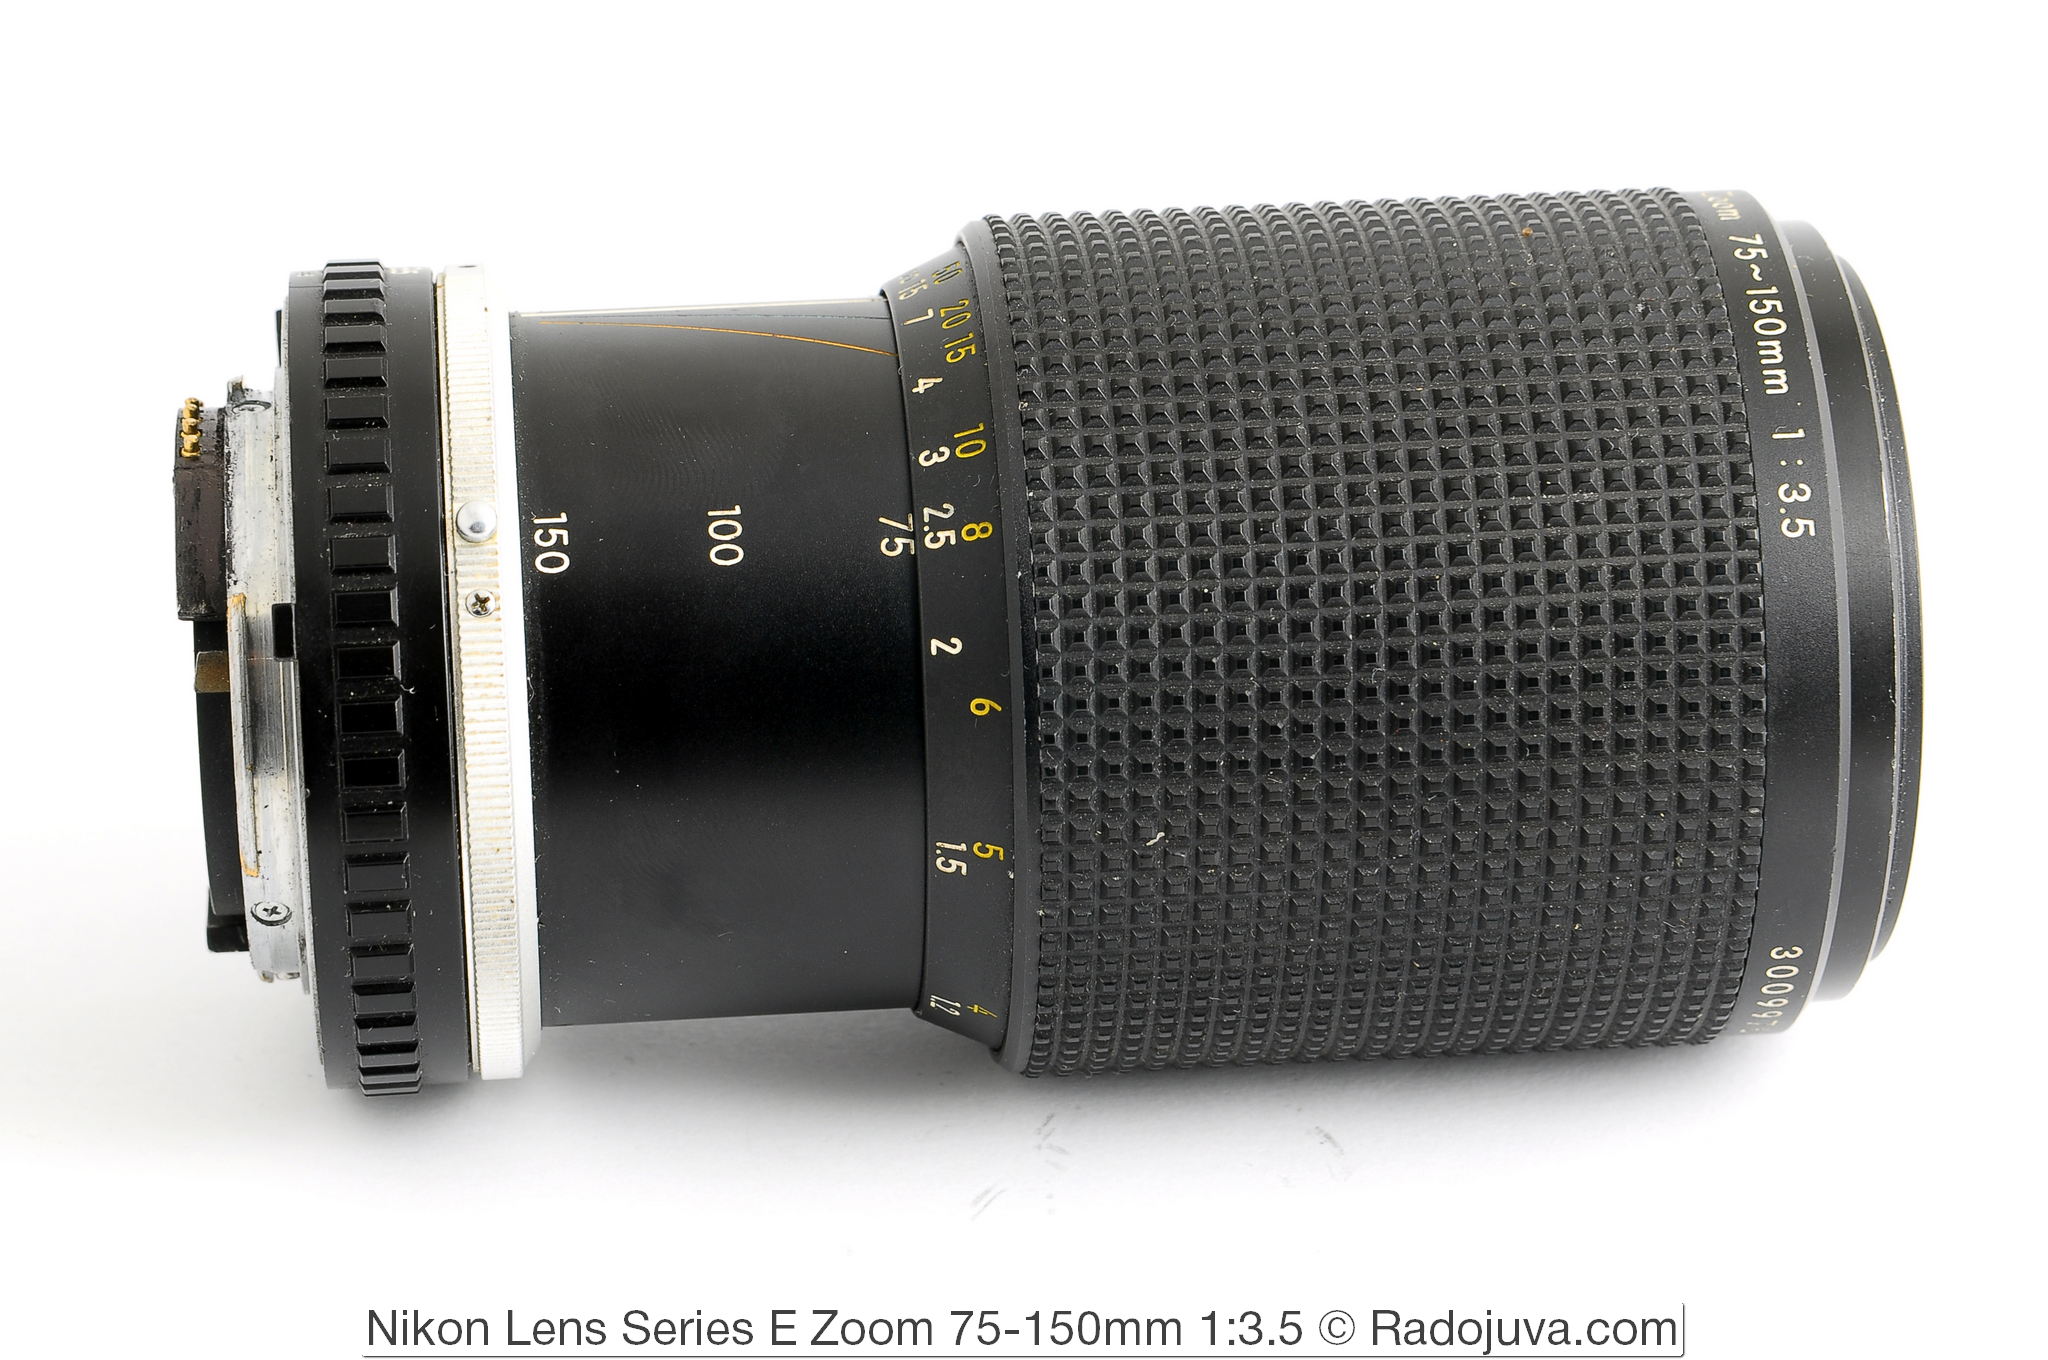 Nikon Lens Series E Zoom 75-150mm 1:3.5 (MKII)